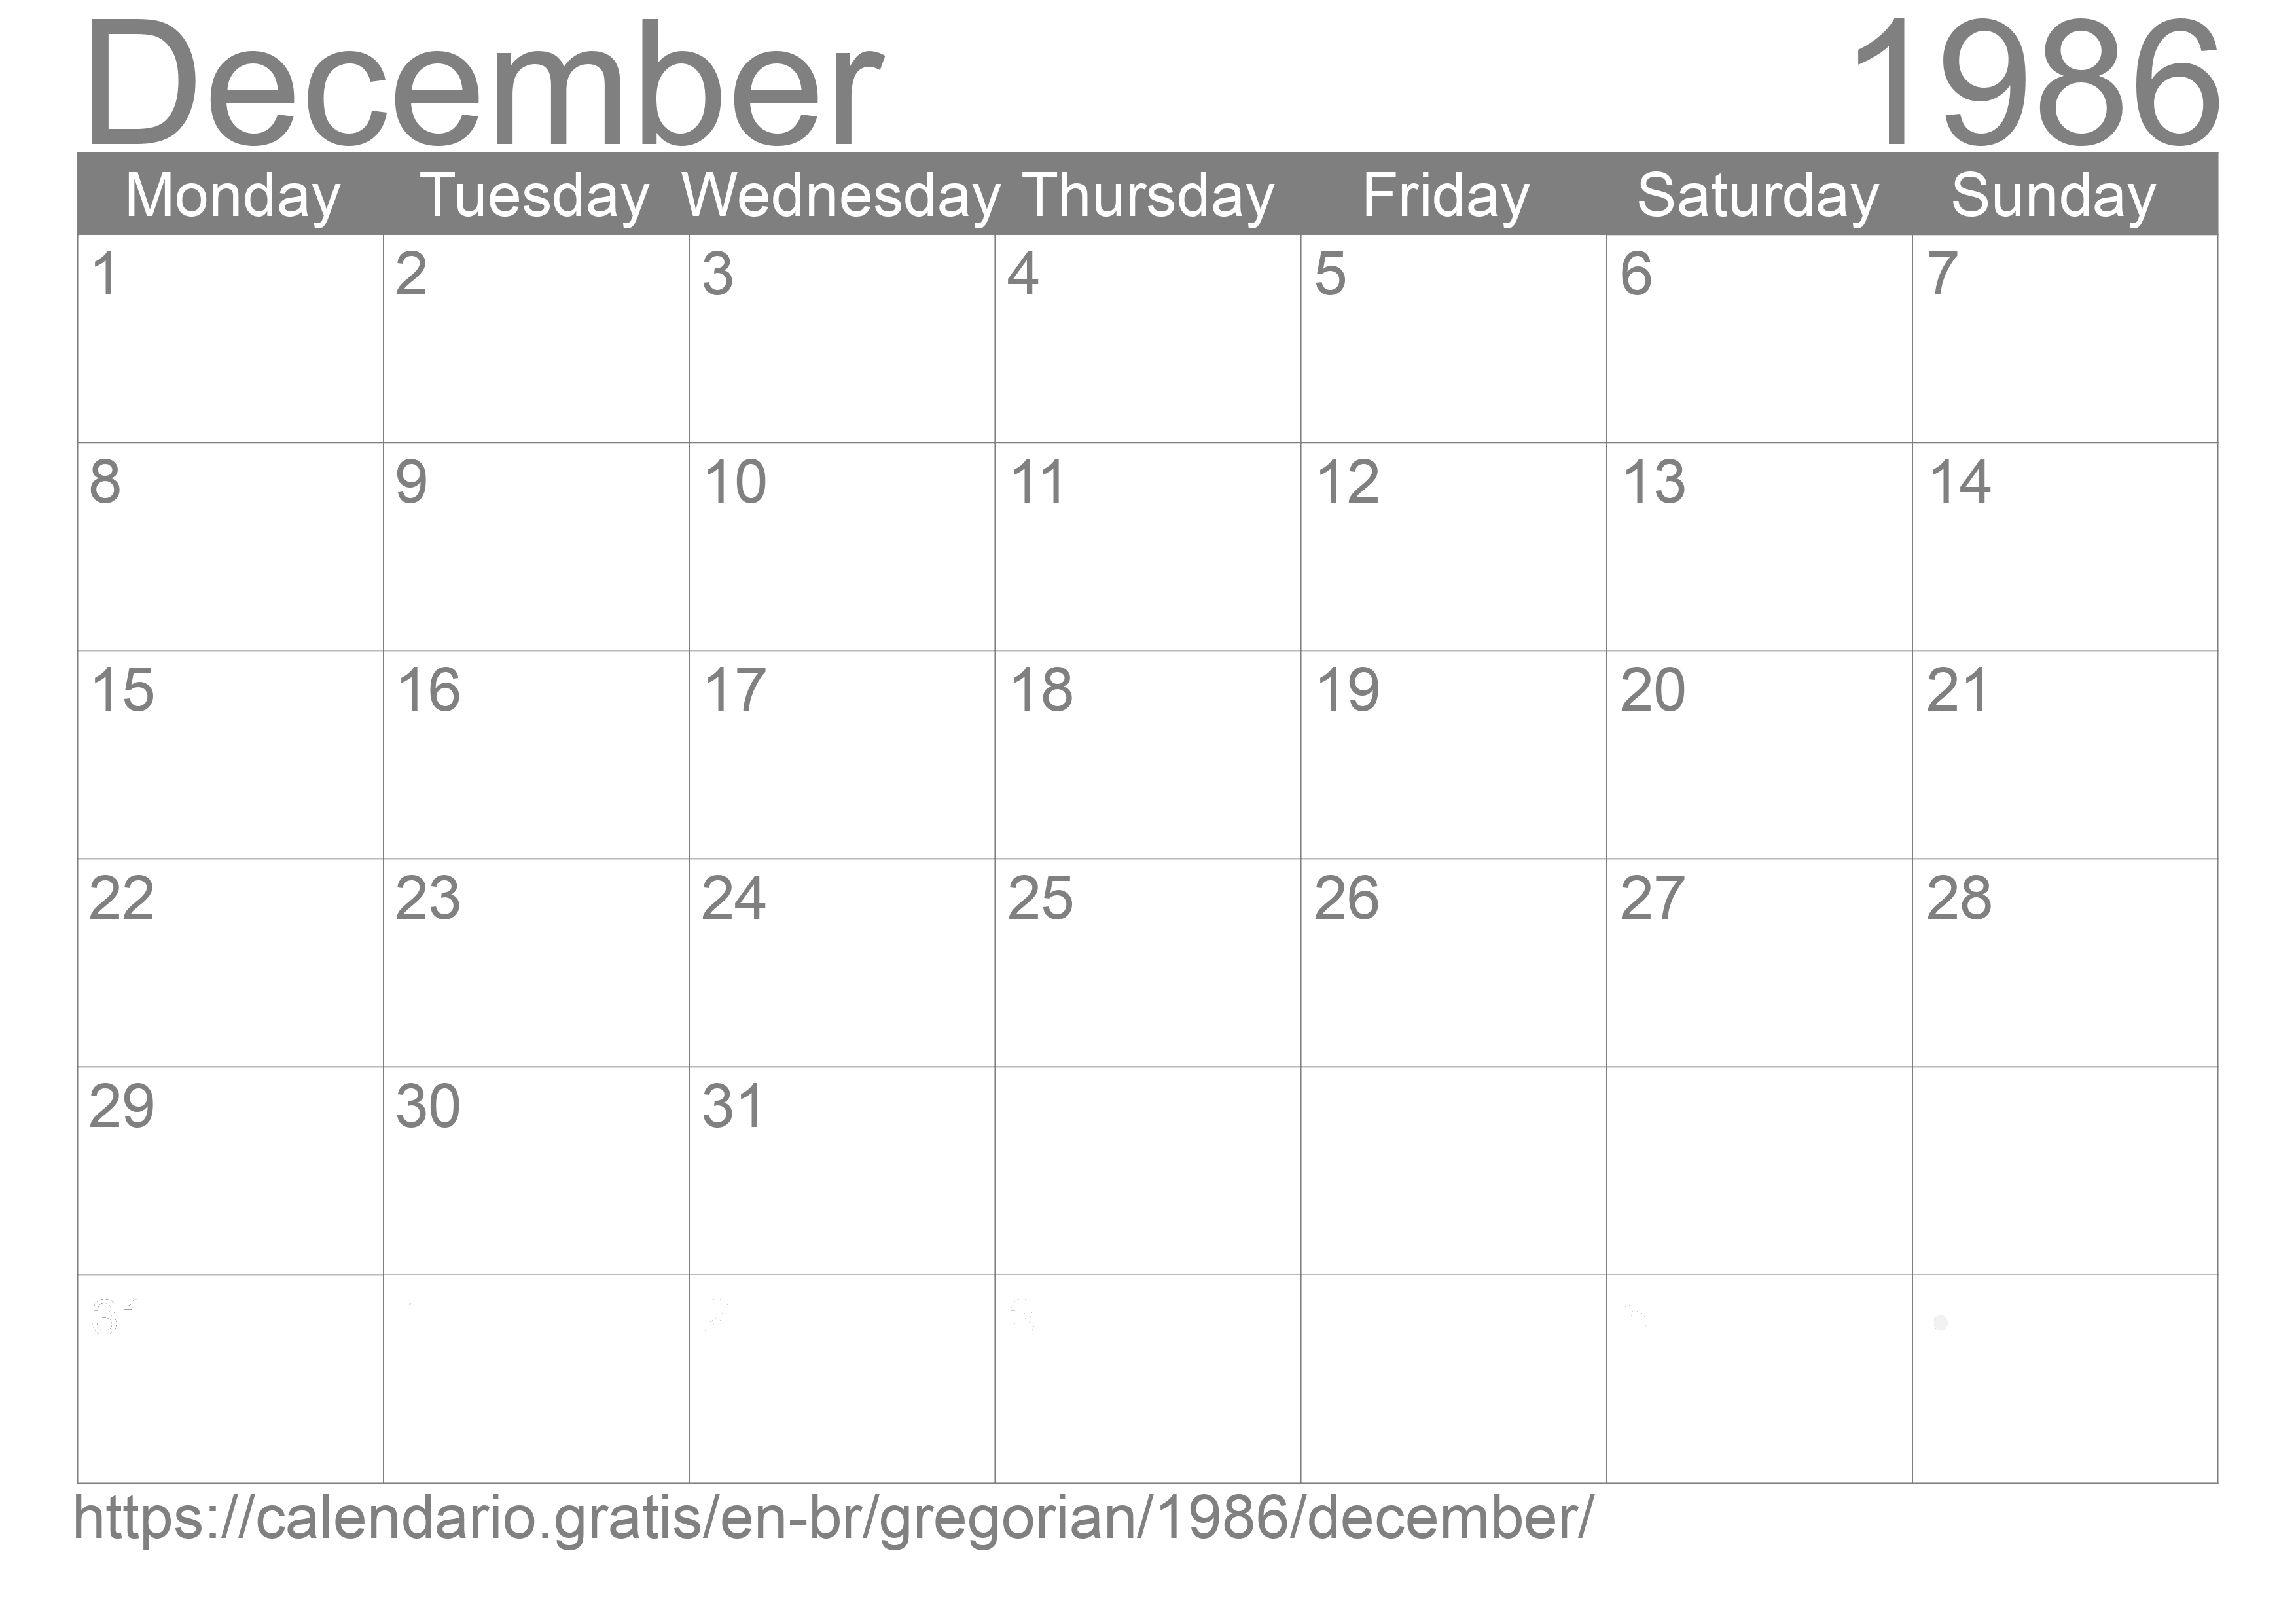 Calendar December 1986 to print